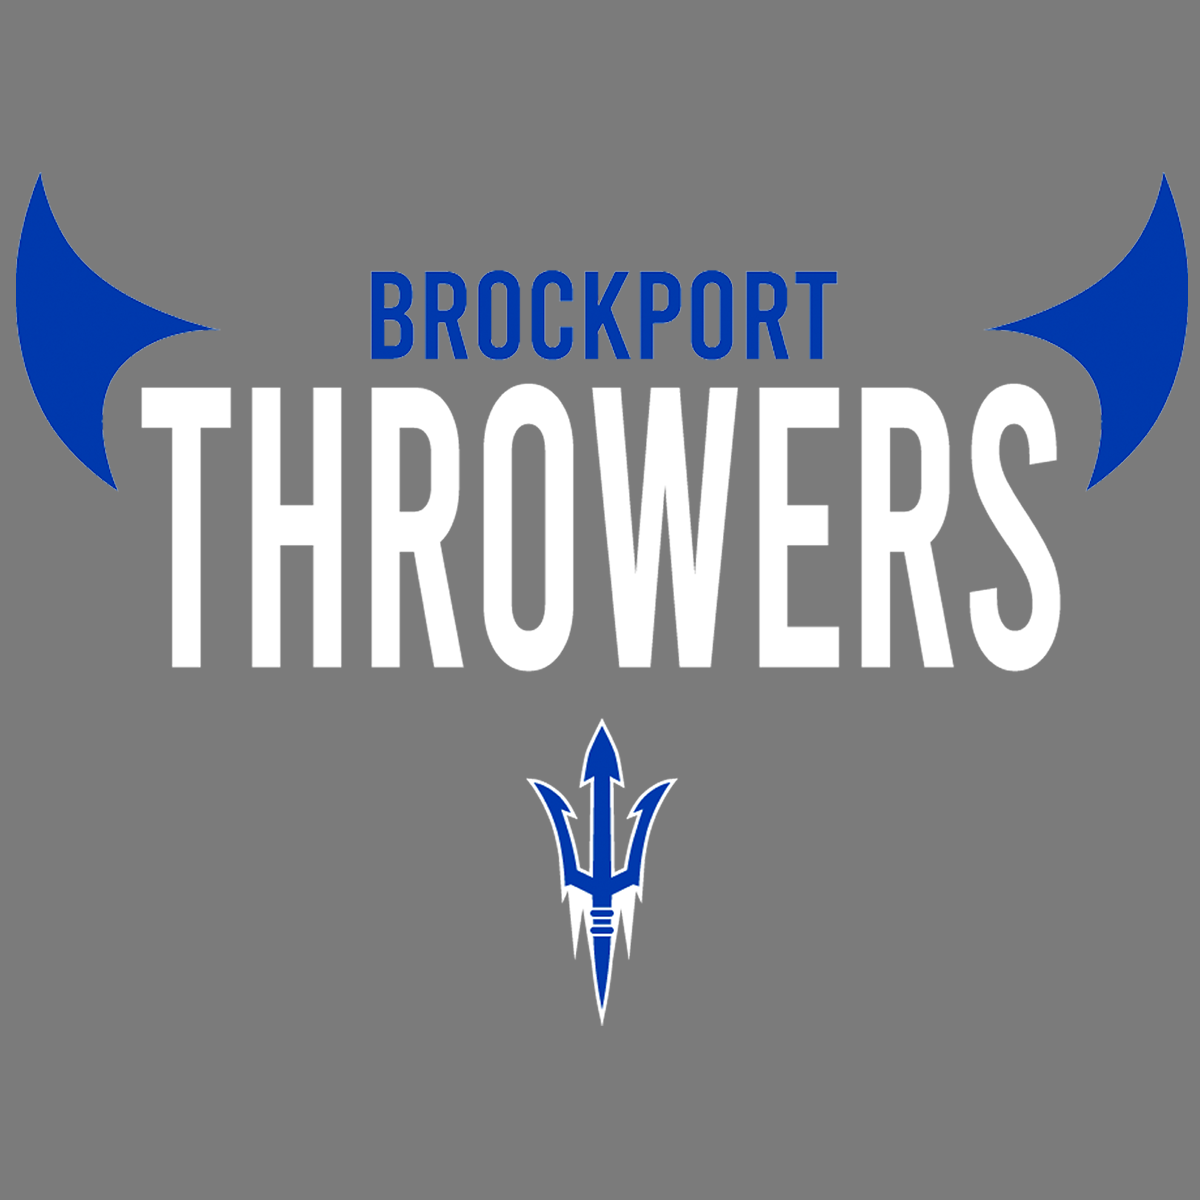 Brockport Throwers Team Store